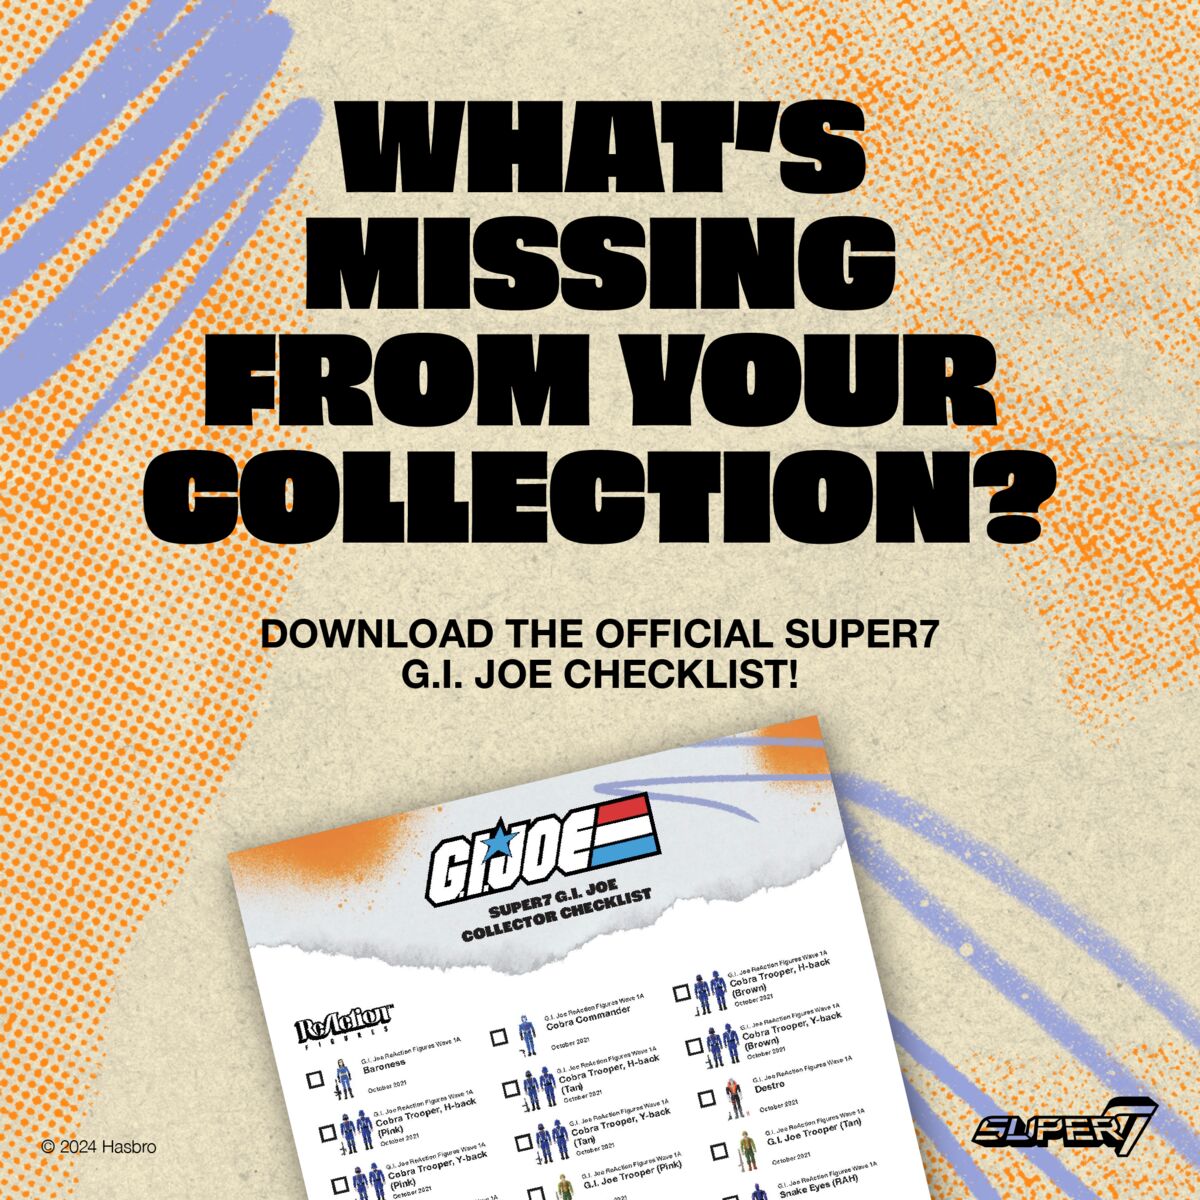 Download the G.I. Joe Checklist